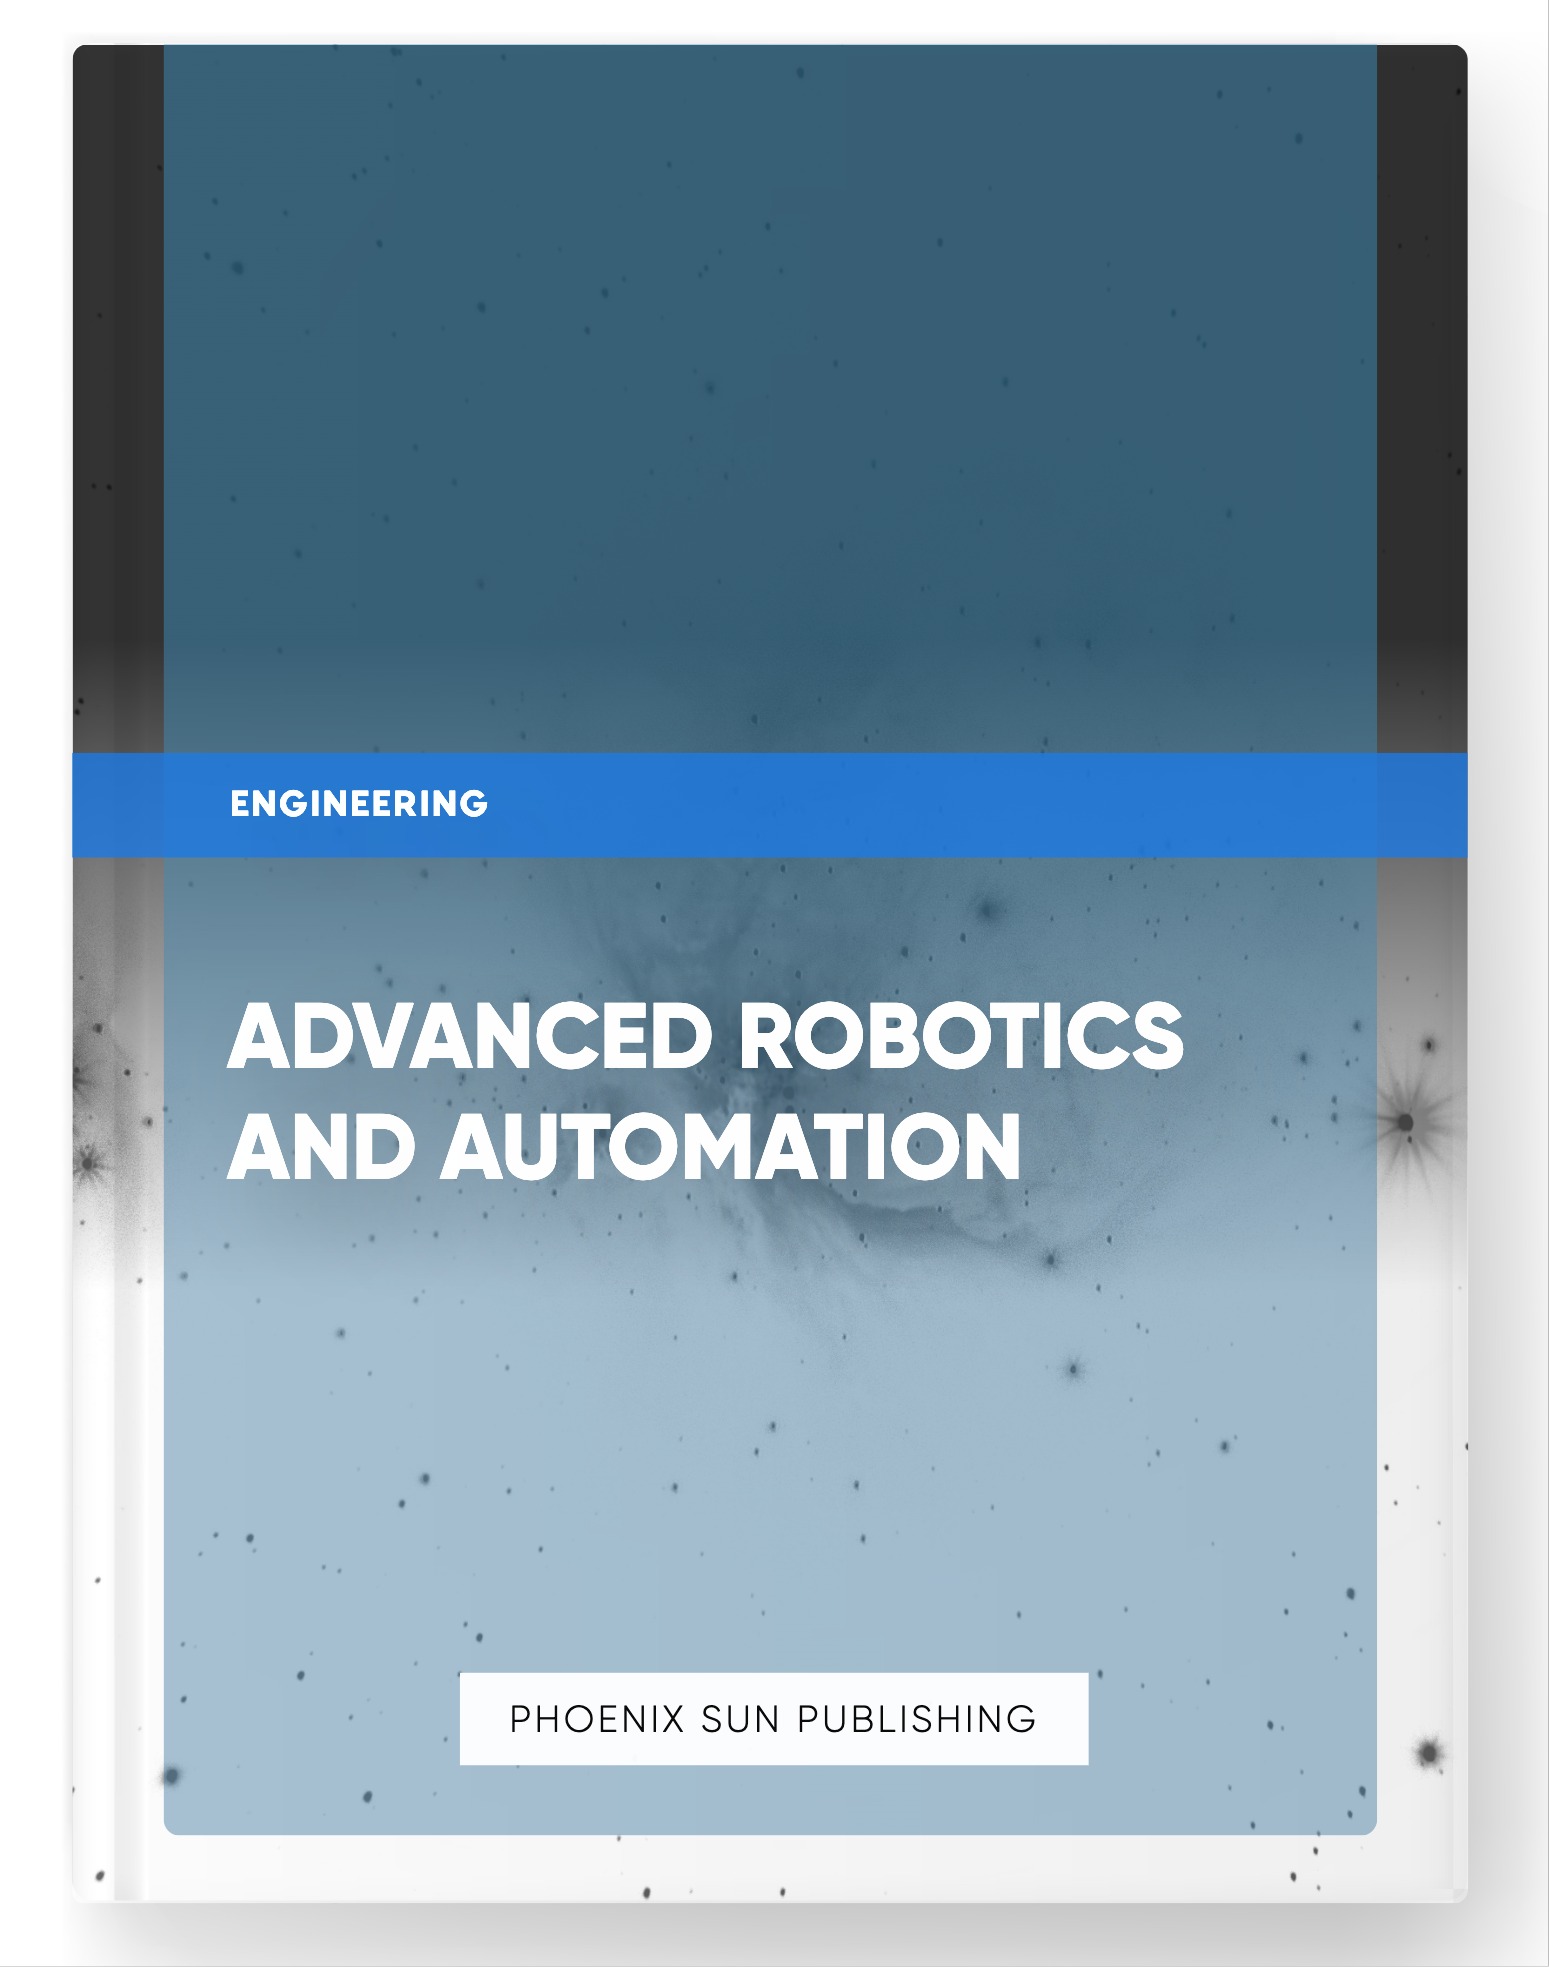 Advanced Robotics and Automation